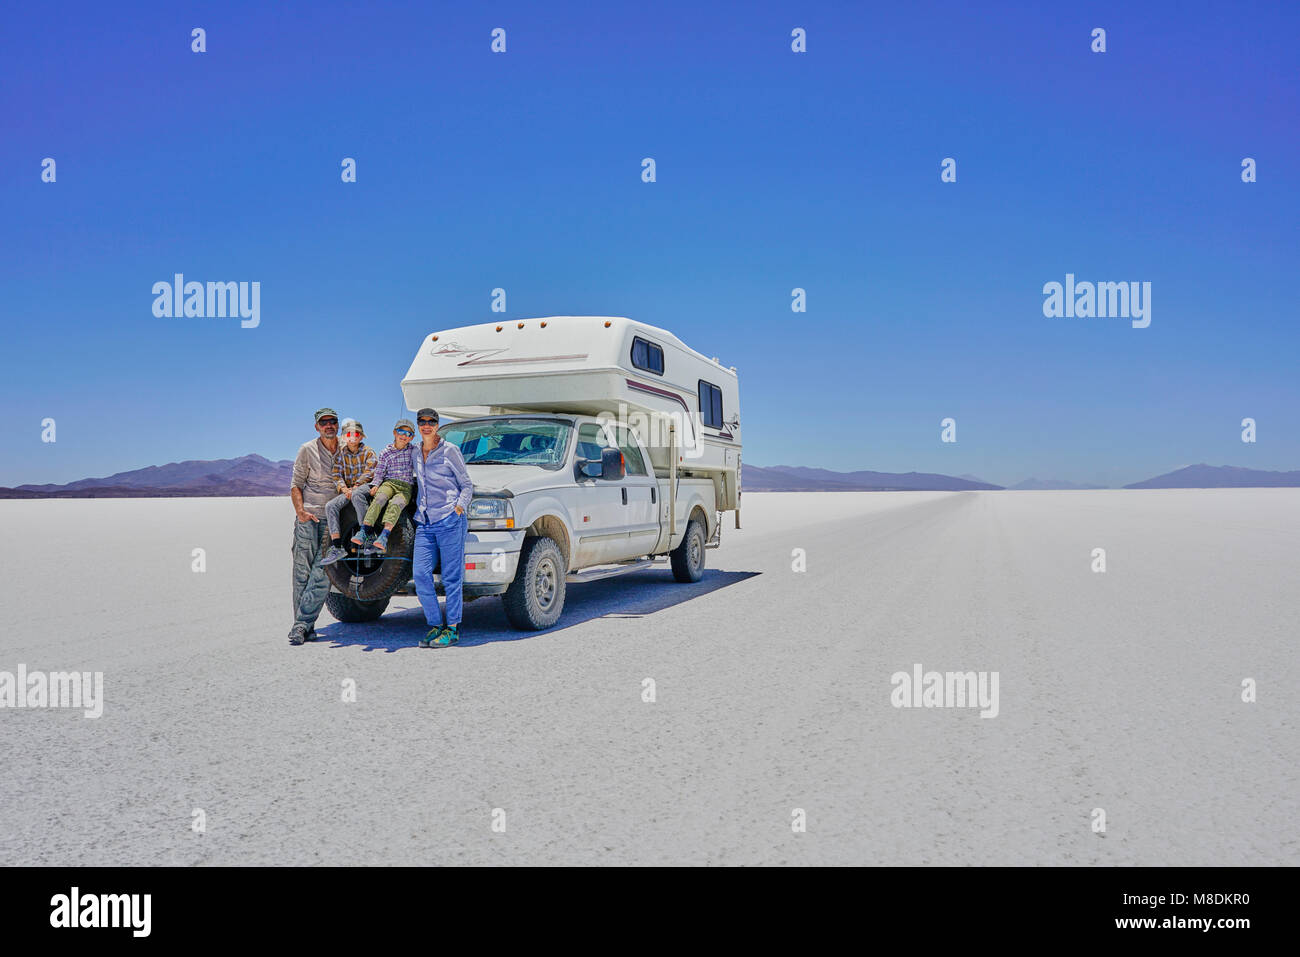 Portrait of family, standing in front of parked recreational vehicle, Salar de Uyuni, Uyuni, Oruro, Bolivia, South America Stock Photo